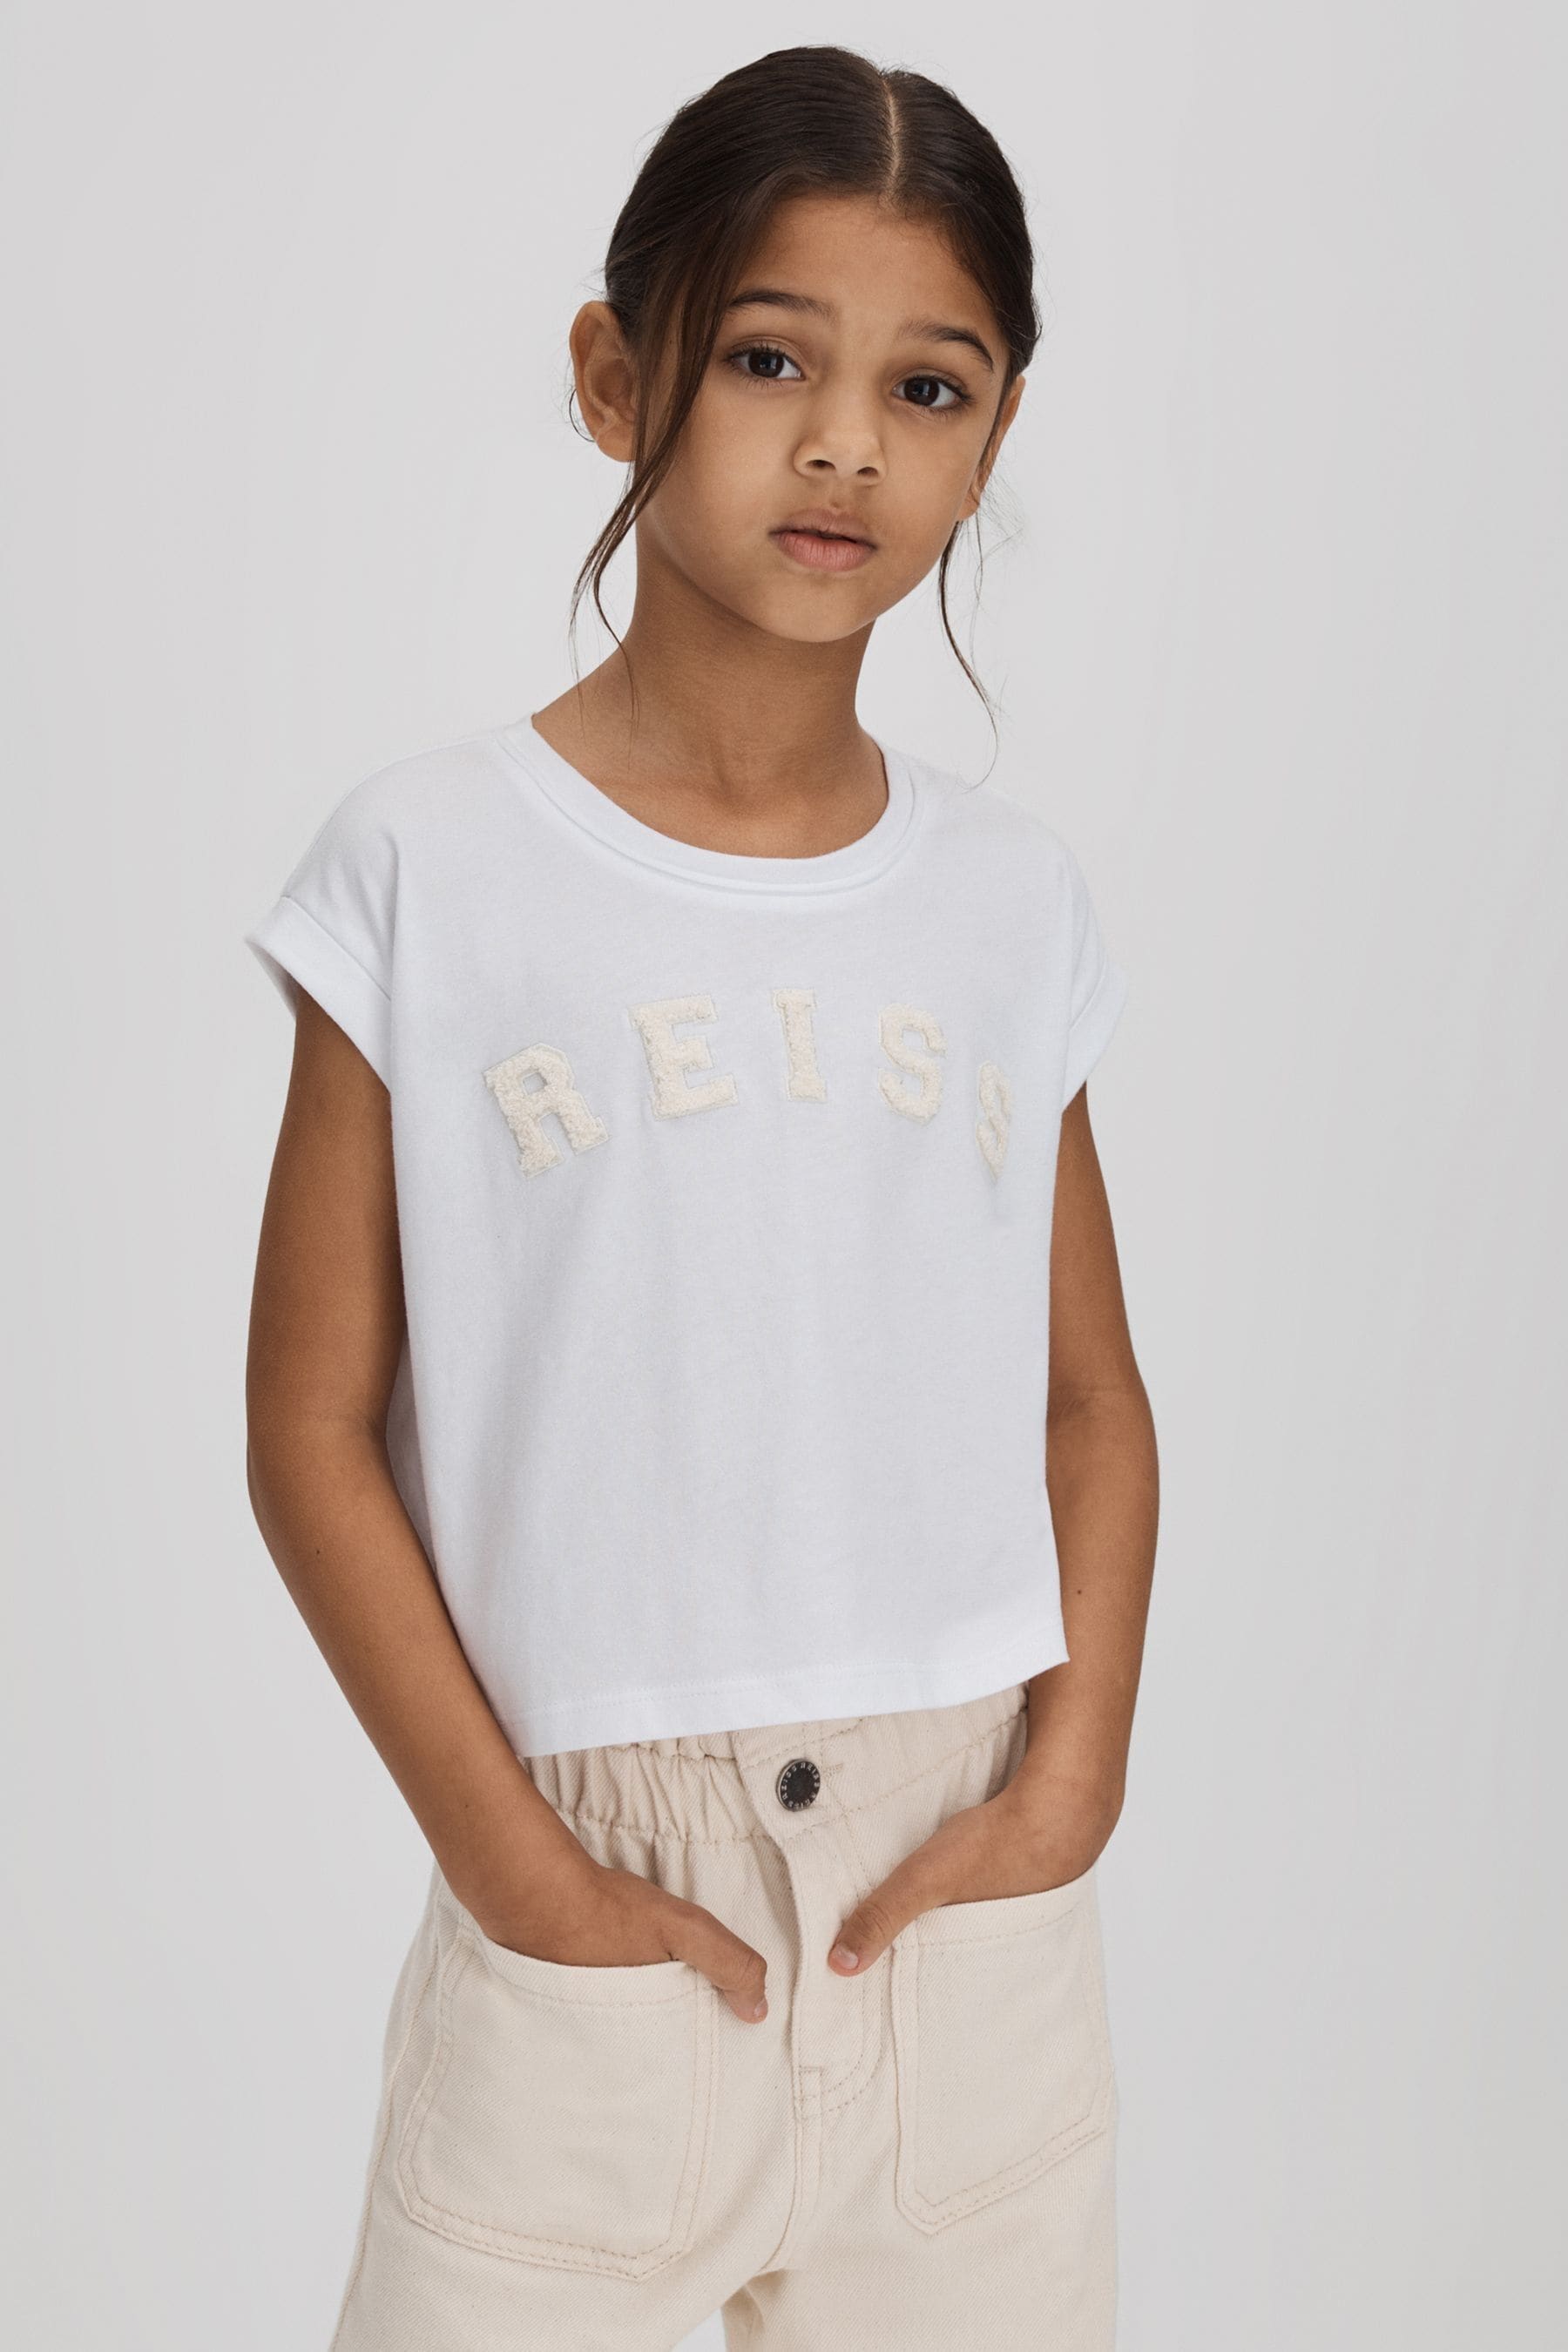 Reiss Kids' Taya - White Senior Textured Motif Cotton Crew Neck T-shirt, 9 - 10 Years